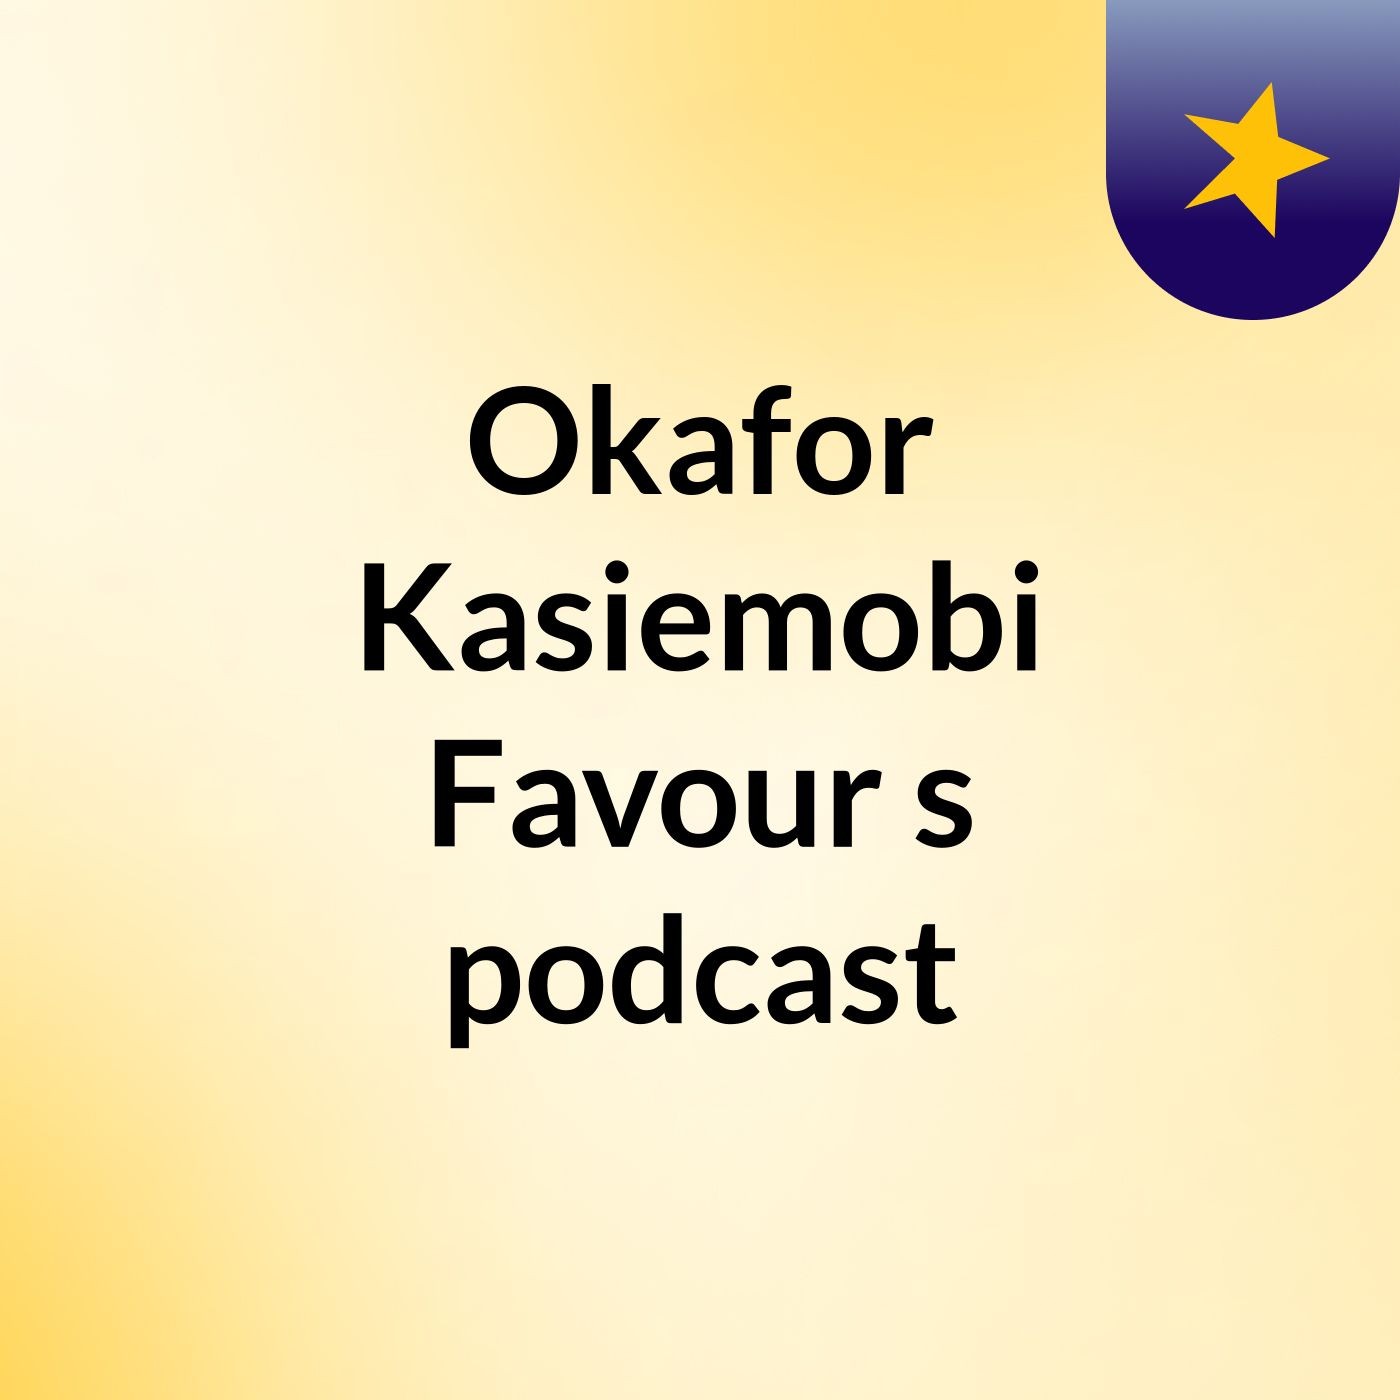 Episode 3 - Okafor Kasiemobi Favour's podcast